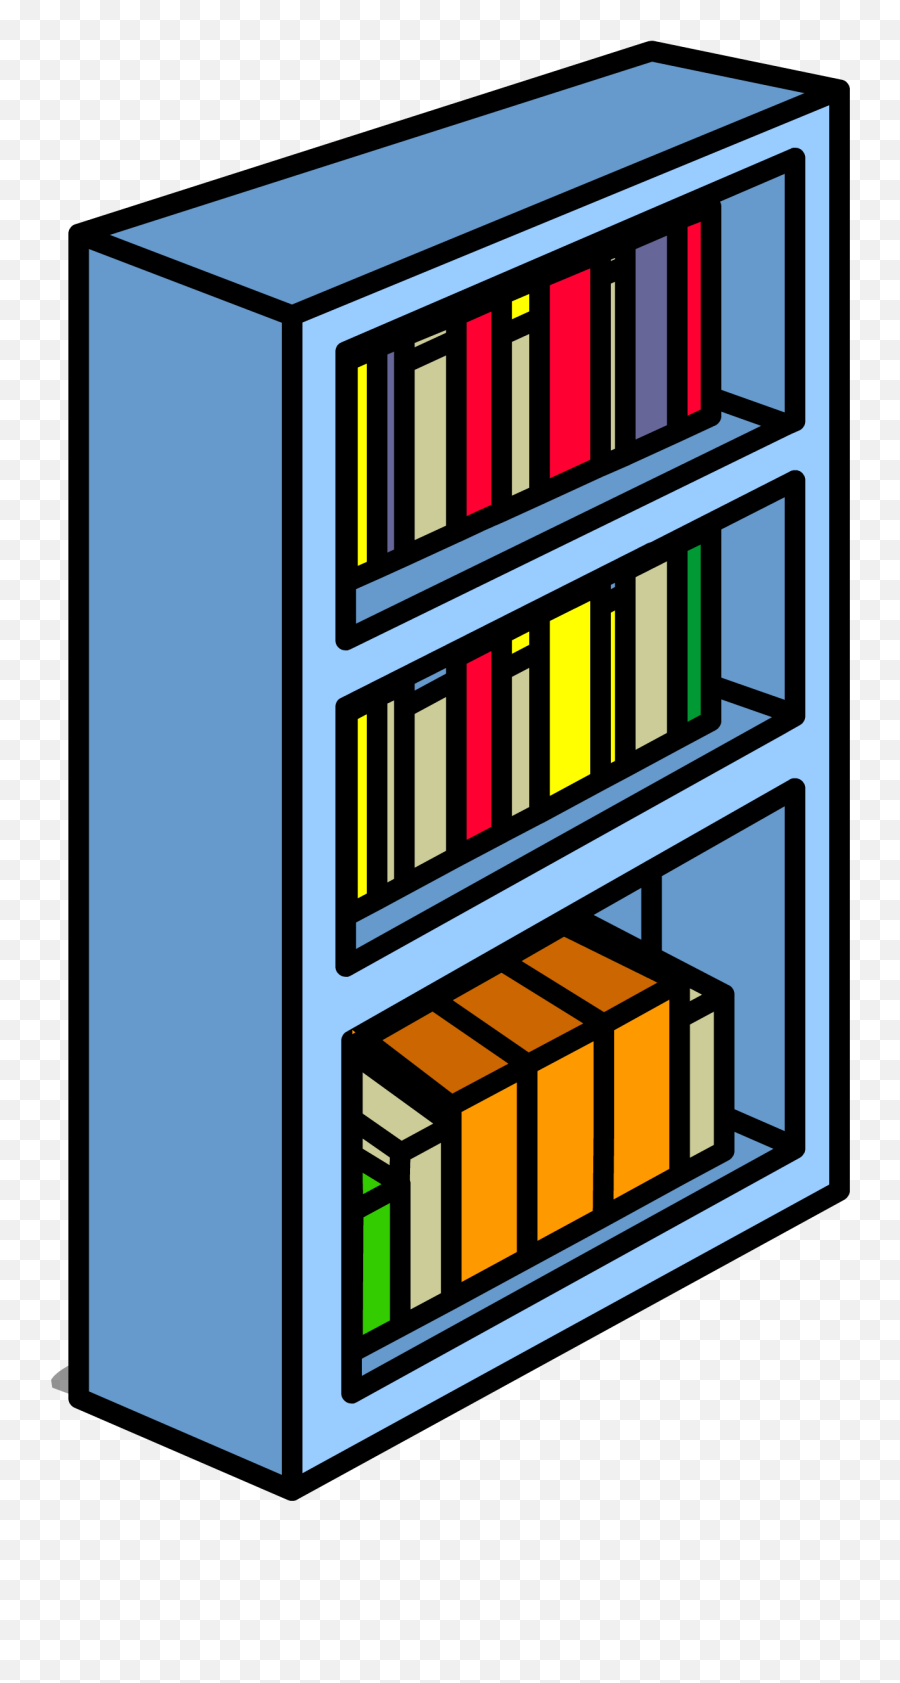 Furniture Clipart Bookshelf Bookshelf Clipart Png Book Shelves Clip Art Bookshelf Png Free Transparent Png Images Pngaaa Com